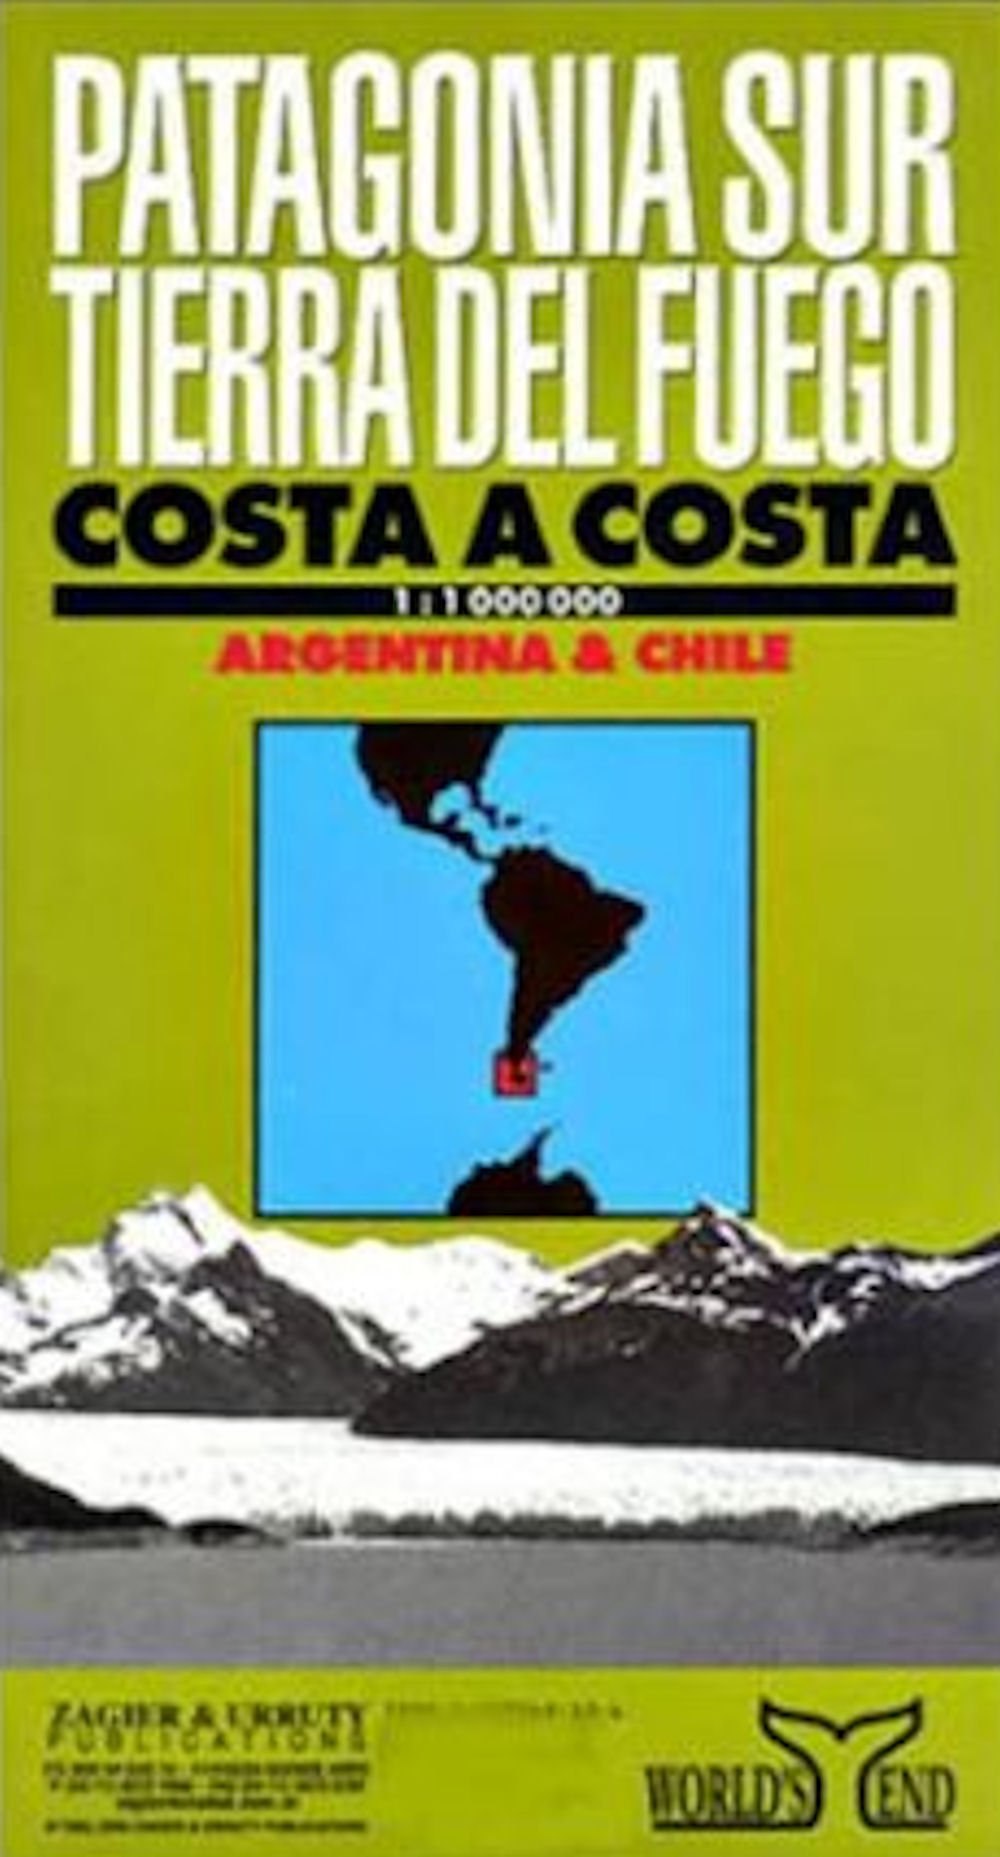 Patagonia CoastToCoast (Zagier&Urruty) - 1:1,000,000